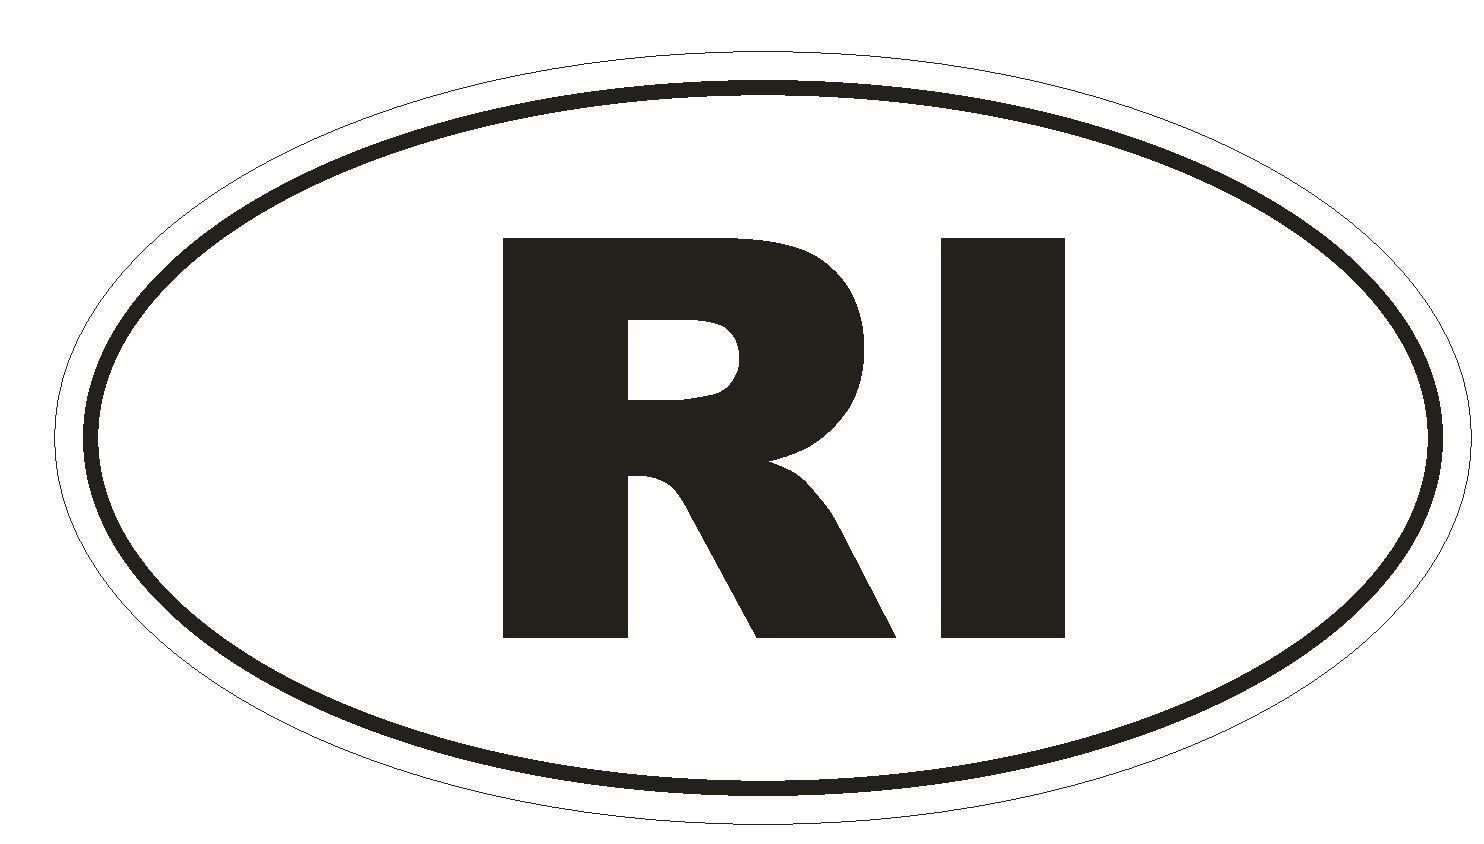 Rhode Island OVAL Bumper Sticker or Helmet Sticker D486 Indonesia Country Code - $1.39 - $24.75